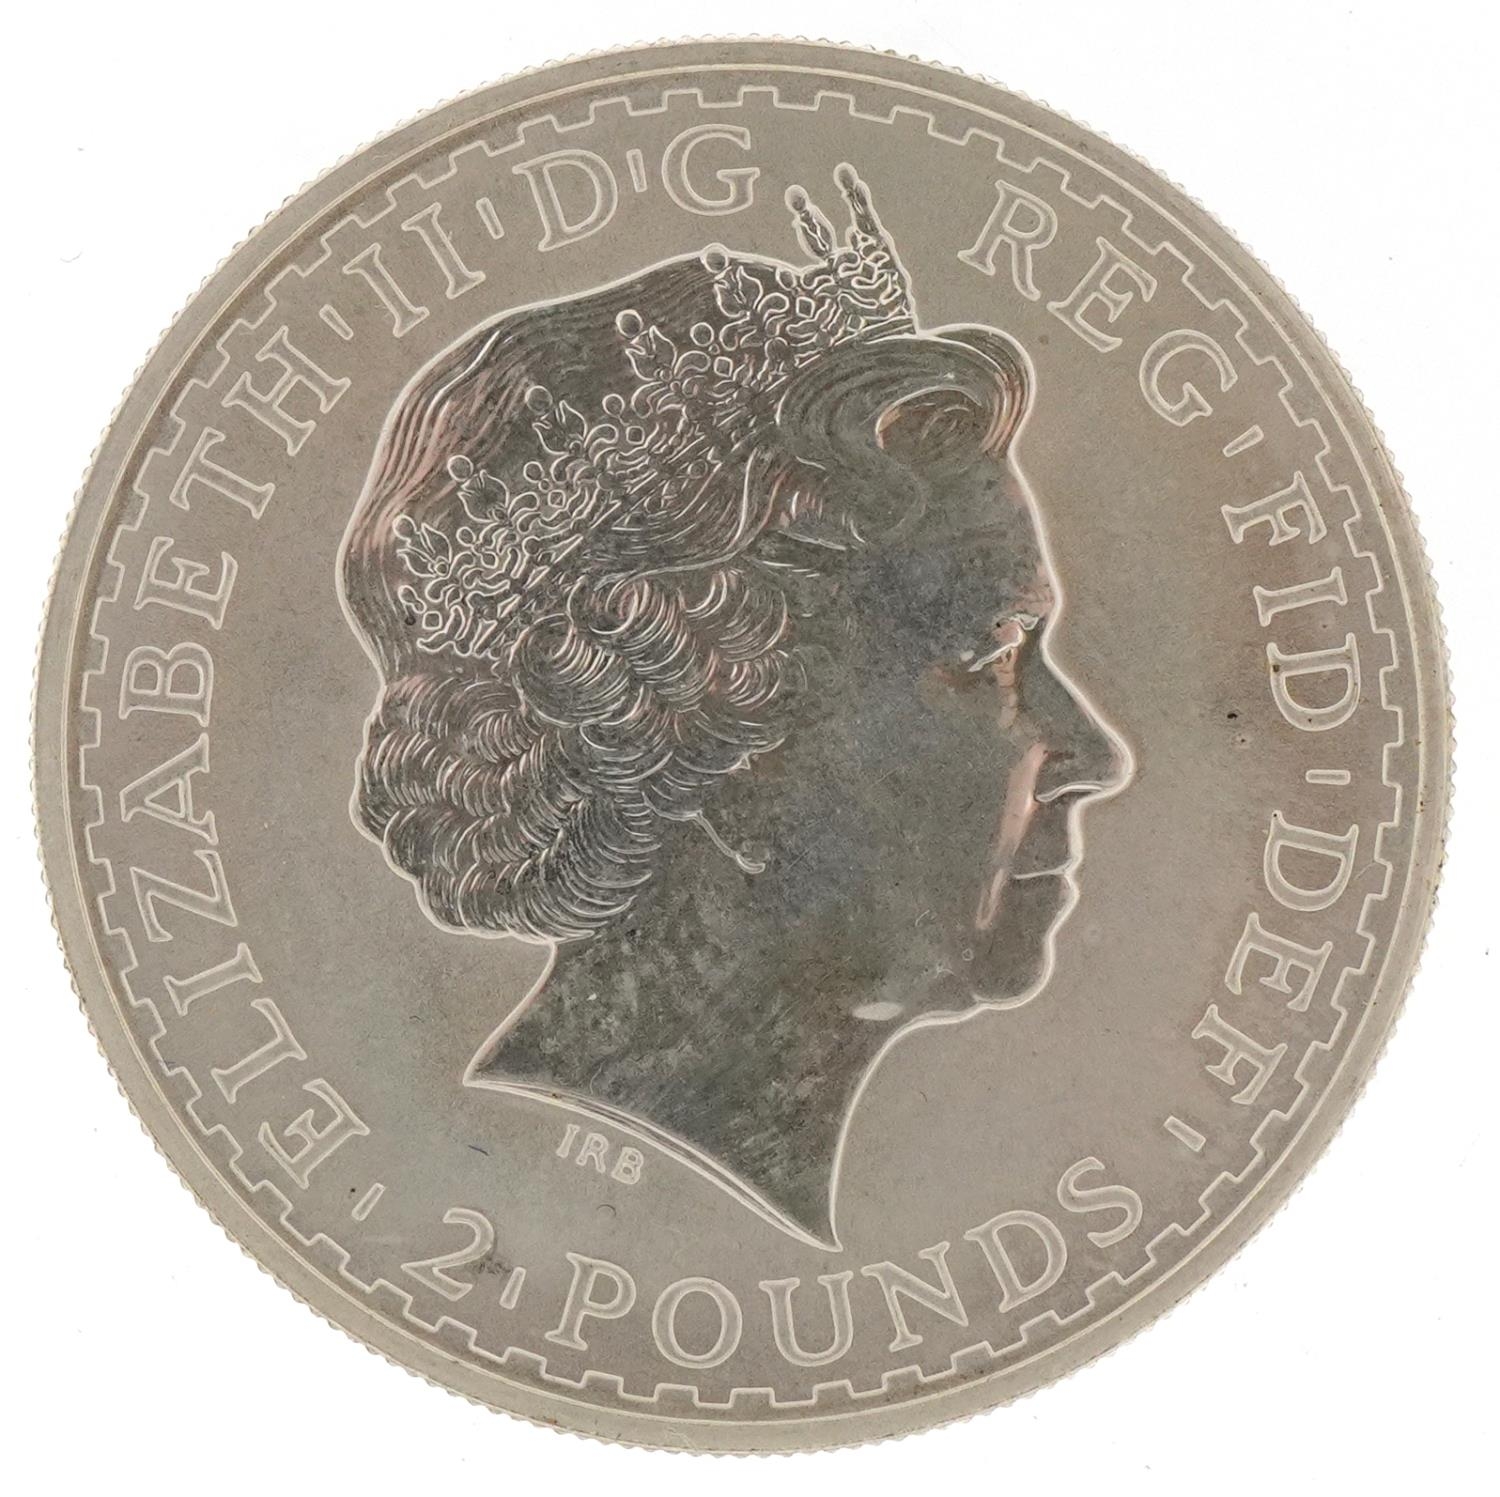 Elizabeth II Britannia 2002 one ounce coin